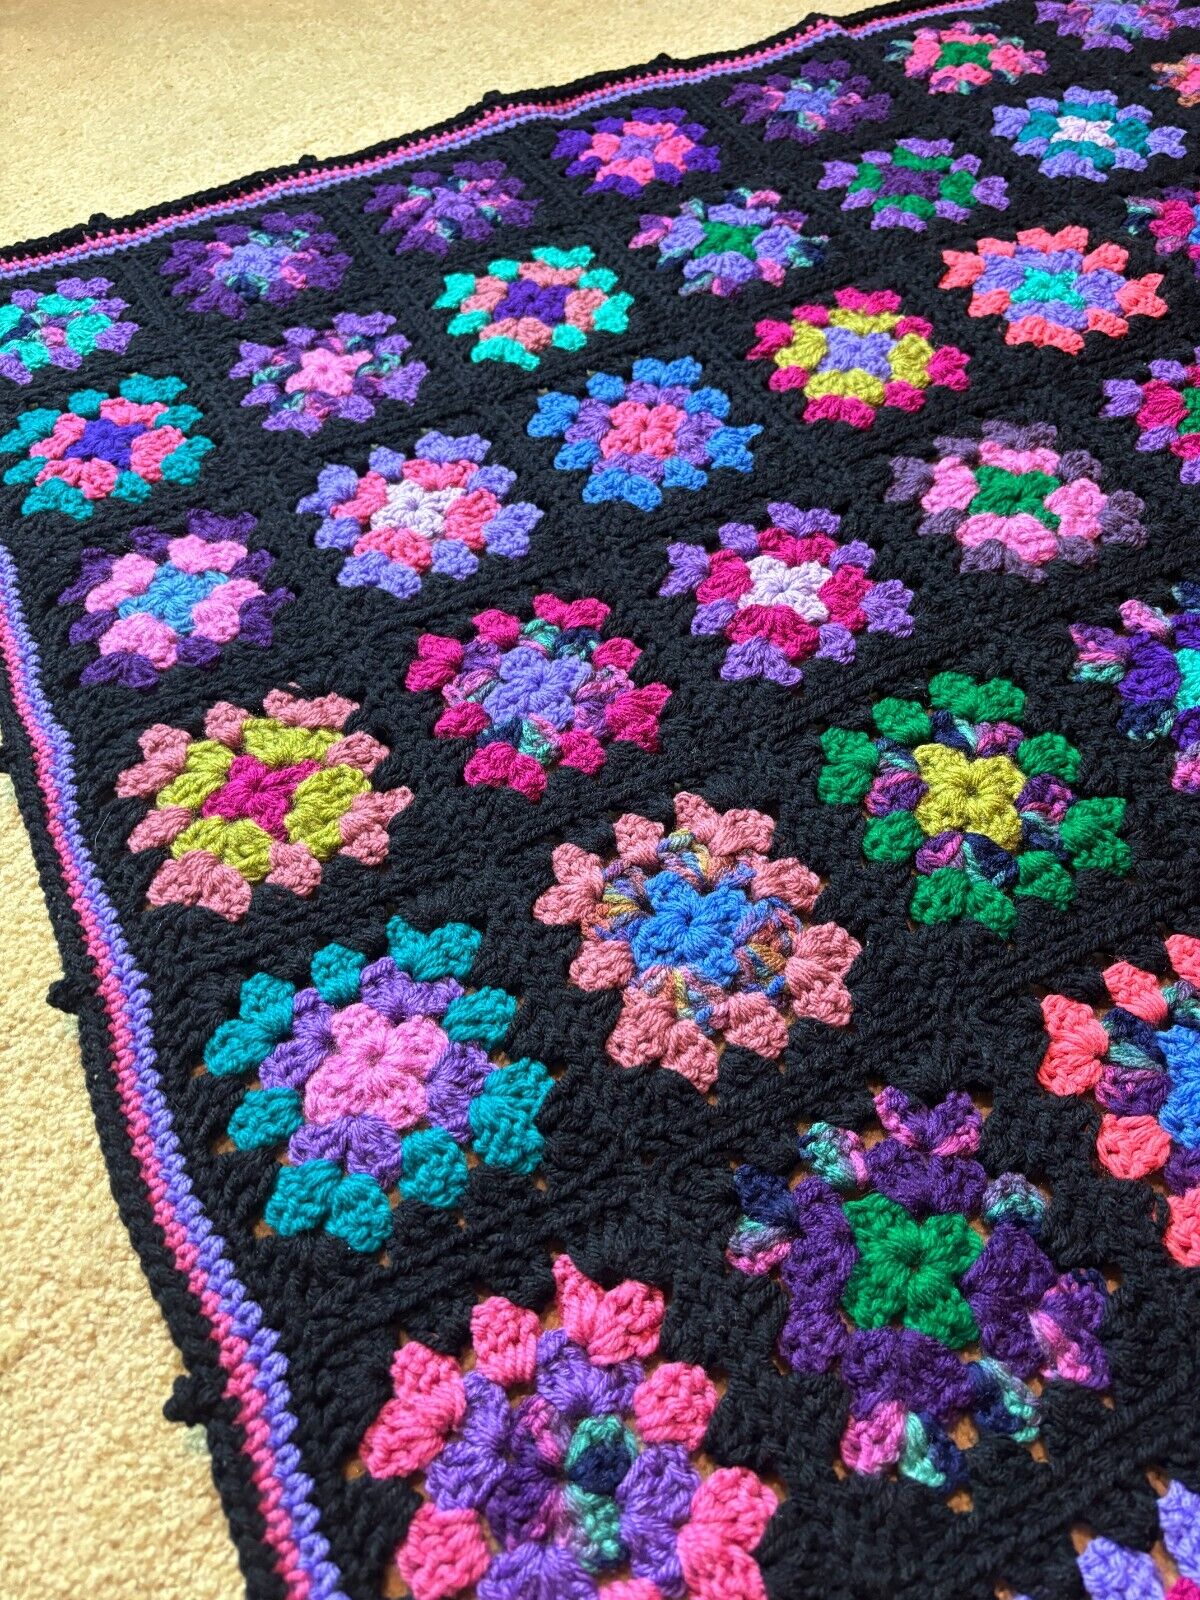 Rainbow Granny Squares Knit Handmade Crochet Afghan Blanket Throw Vintage 72x56